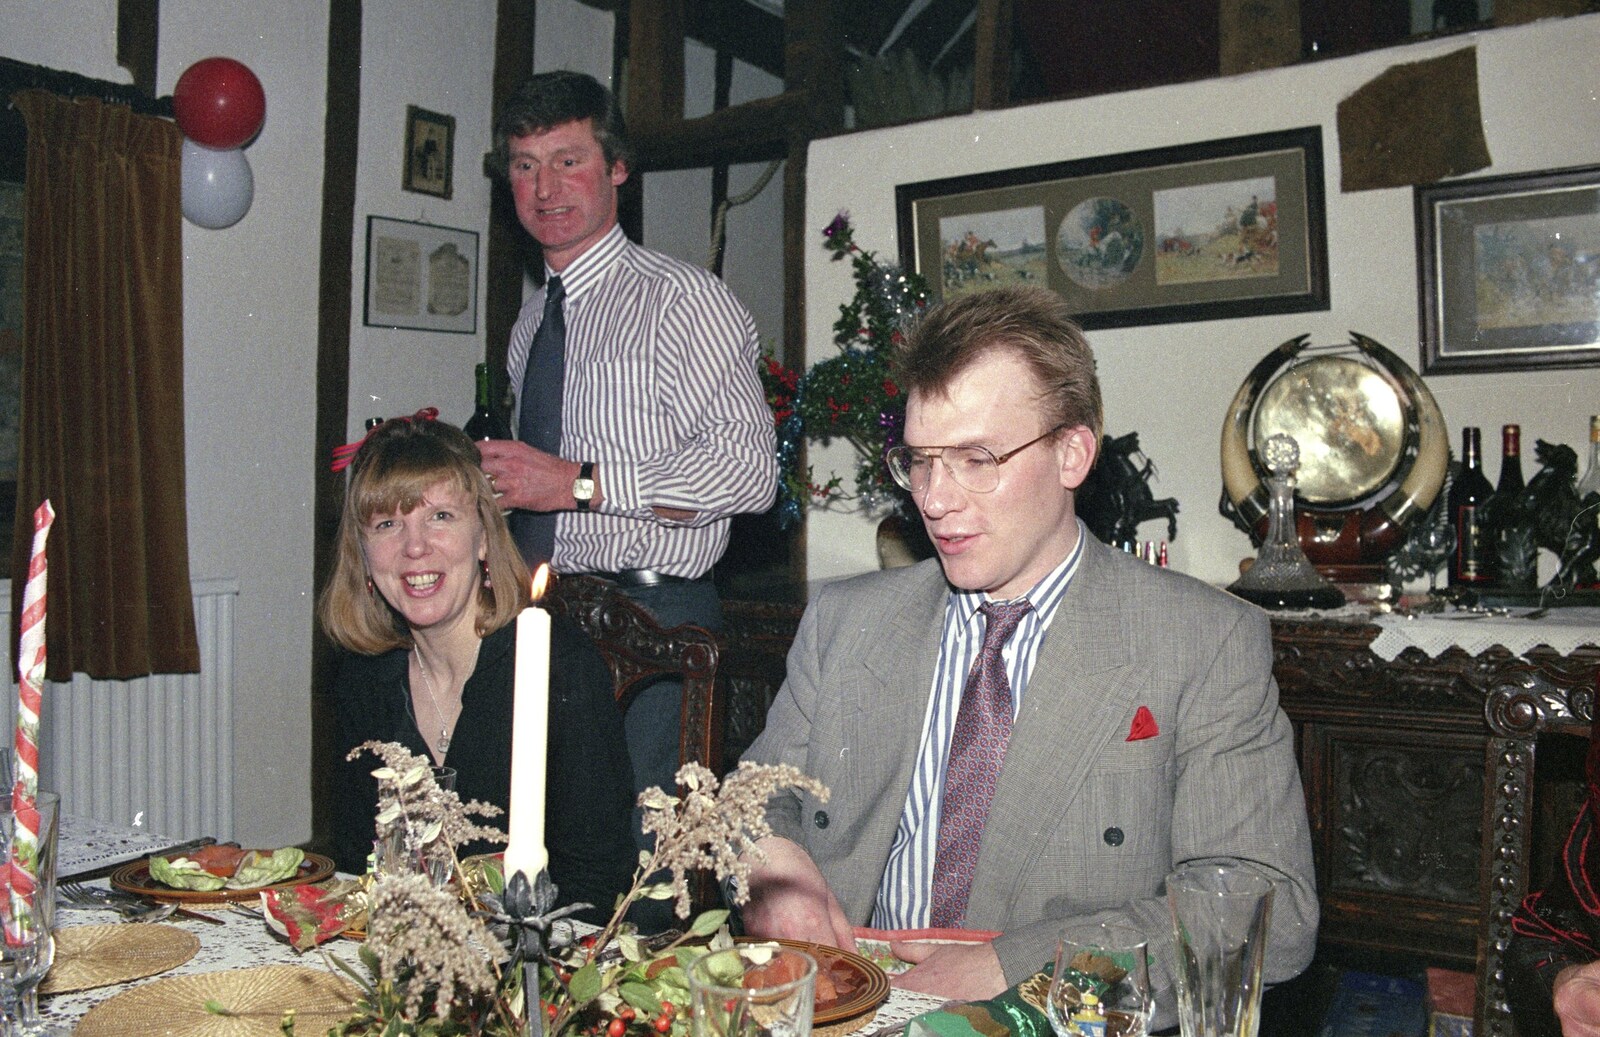 Geoff roams around from Christmas Dinner with Geoff and Brenda, Stuston, Suffolk - 25th December 1990